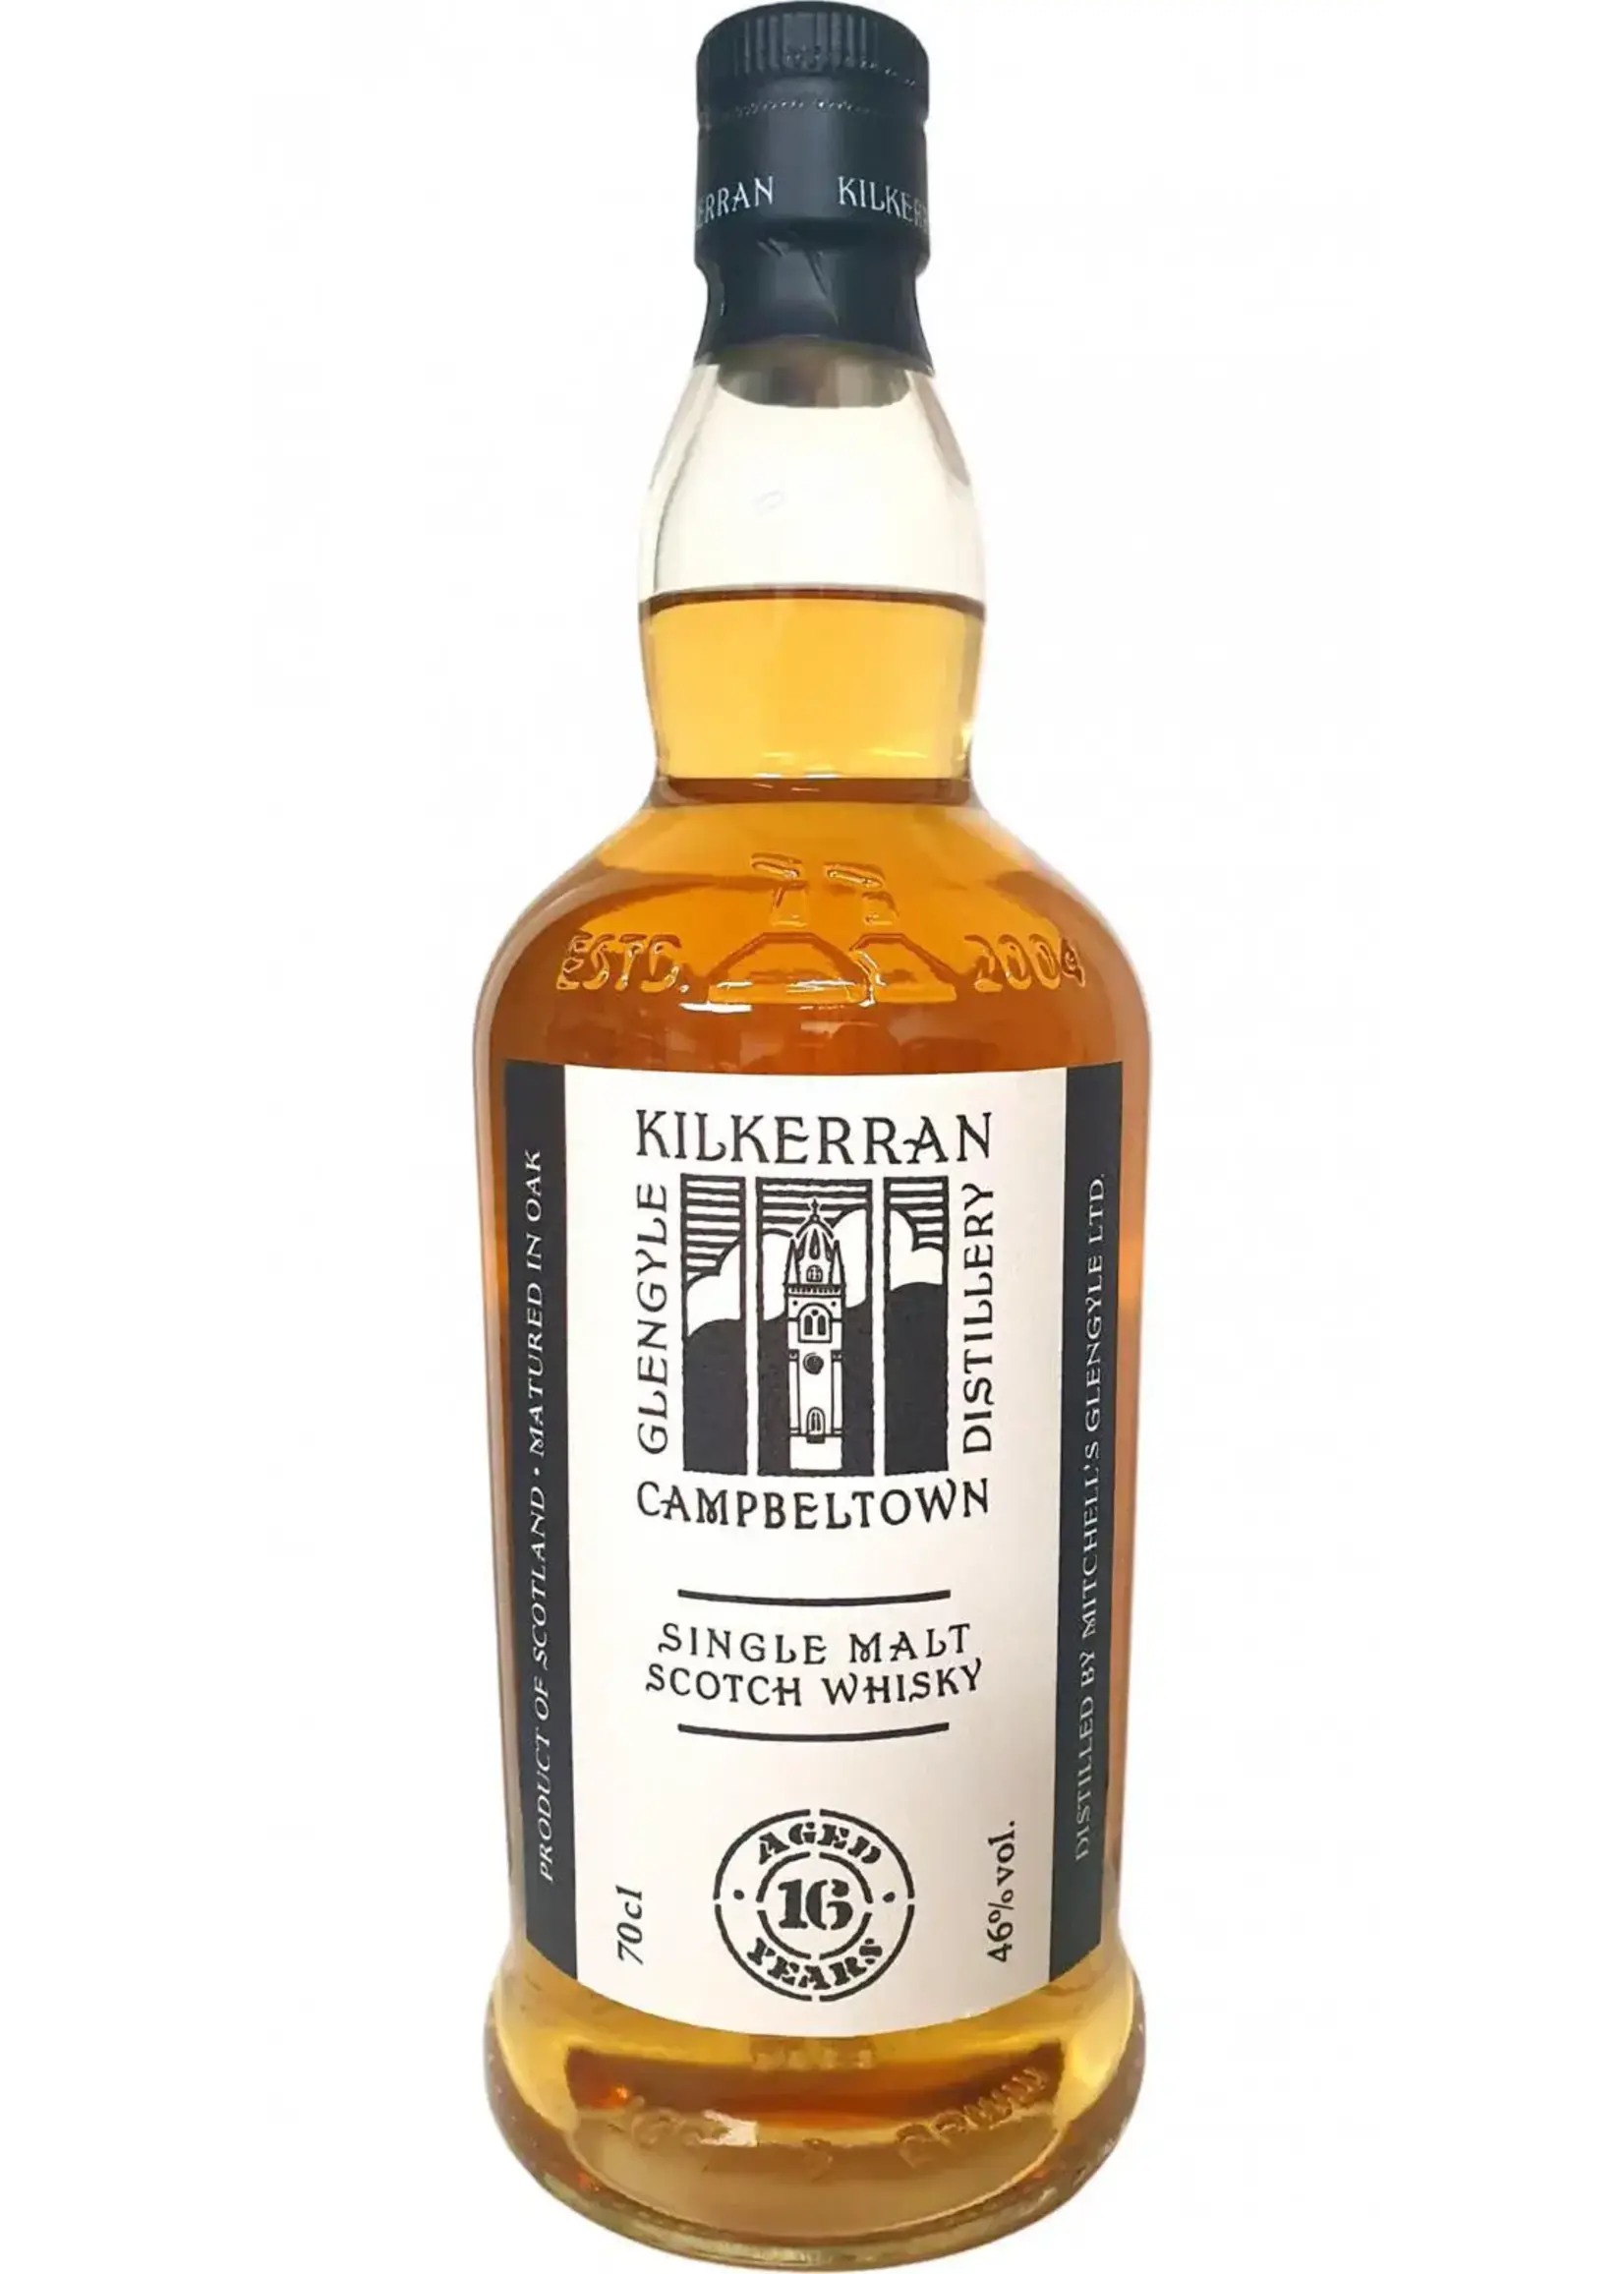 Glengyle Distillery Kilkerran Glengyle Distillery Kilkerran / 16 Year Old Single Malt Scotch Whisky / 750mL